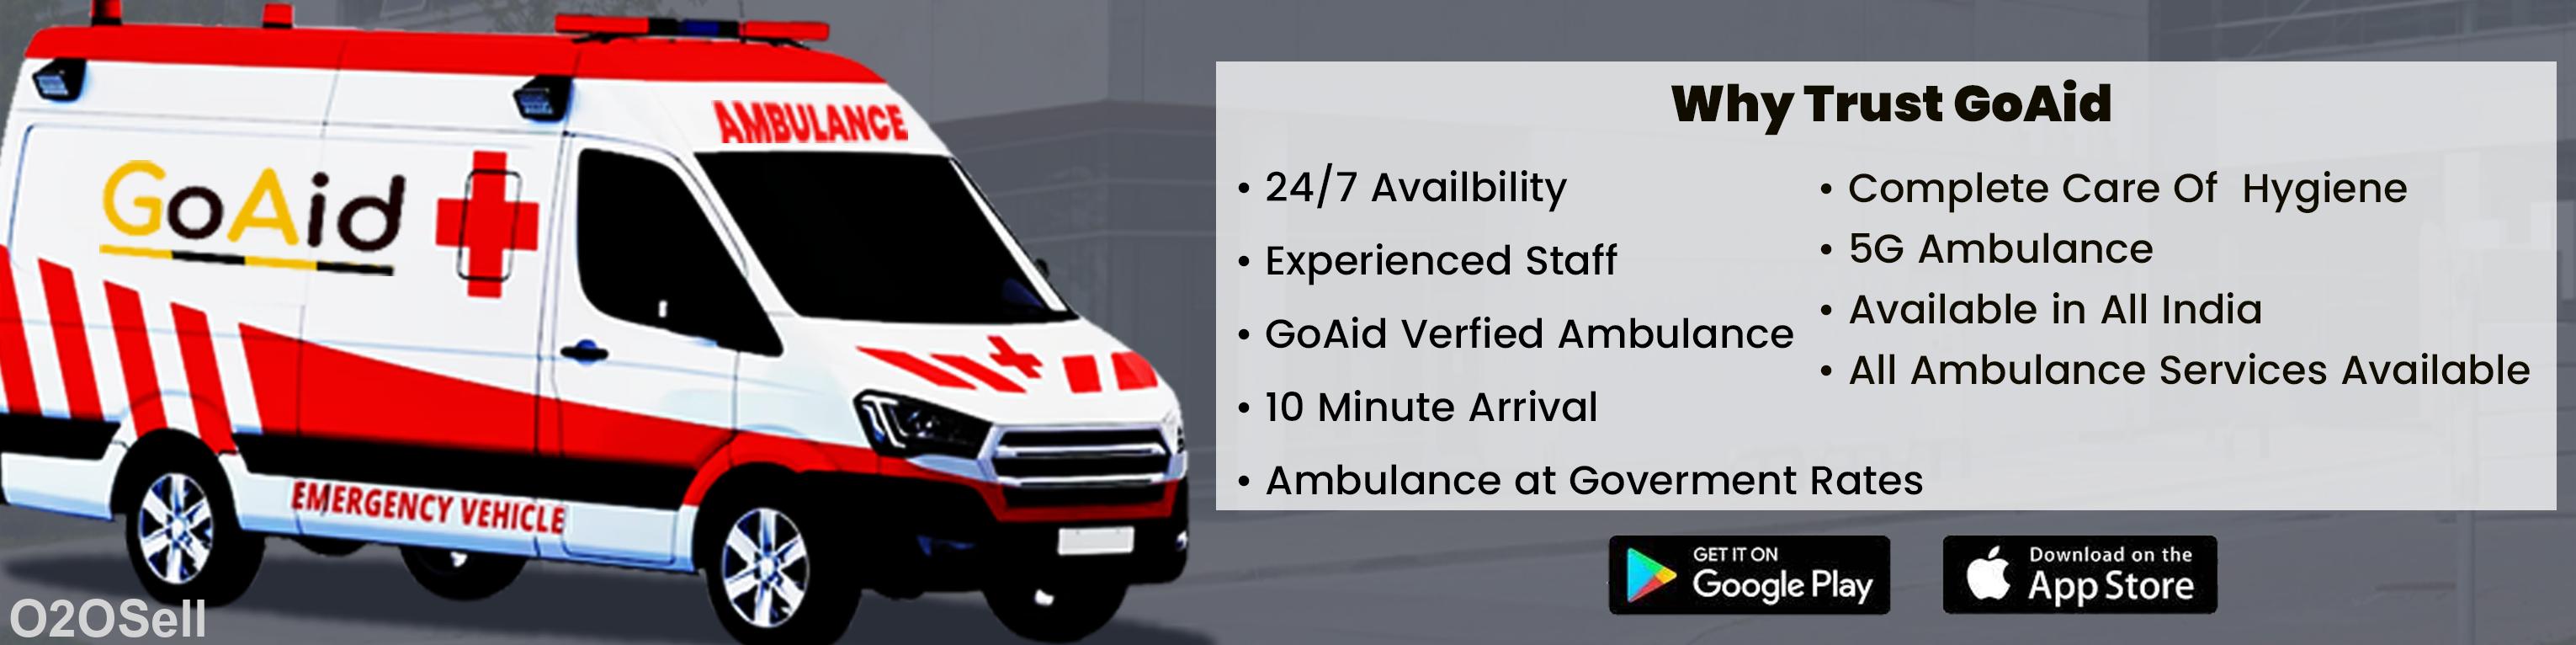 GoAid ambulance service - Cover Image